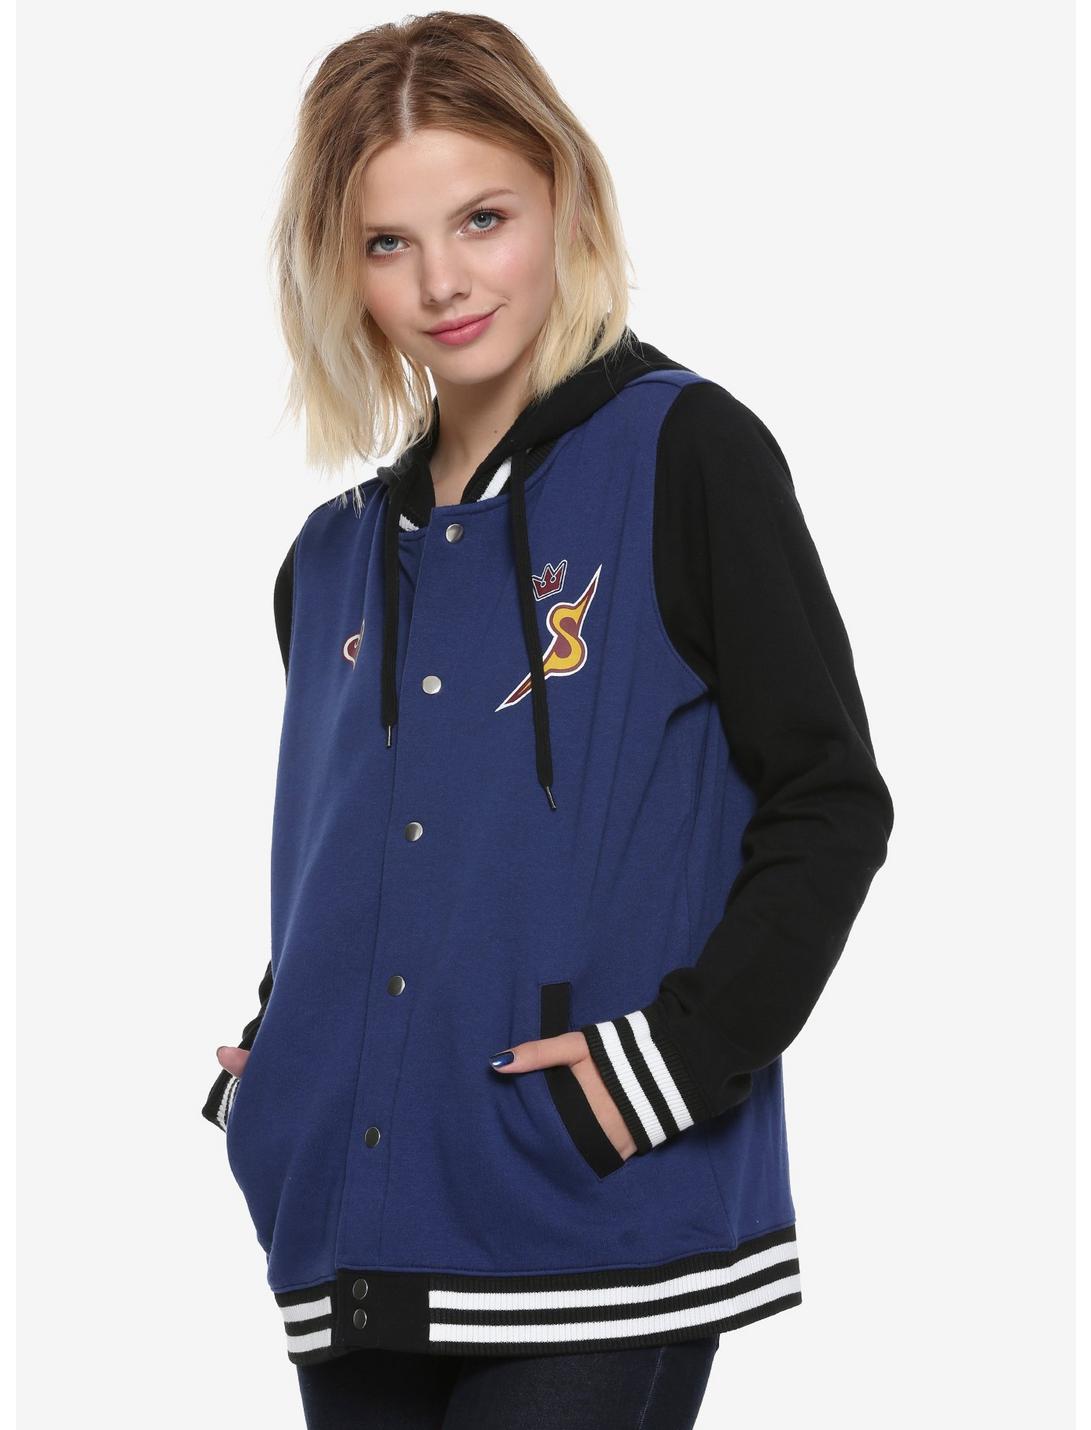 Disney Kingdom Hearts Girls Varsity Jacket, BLUE, hi-res